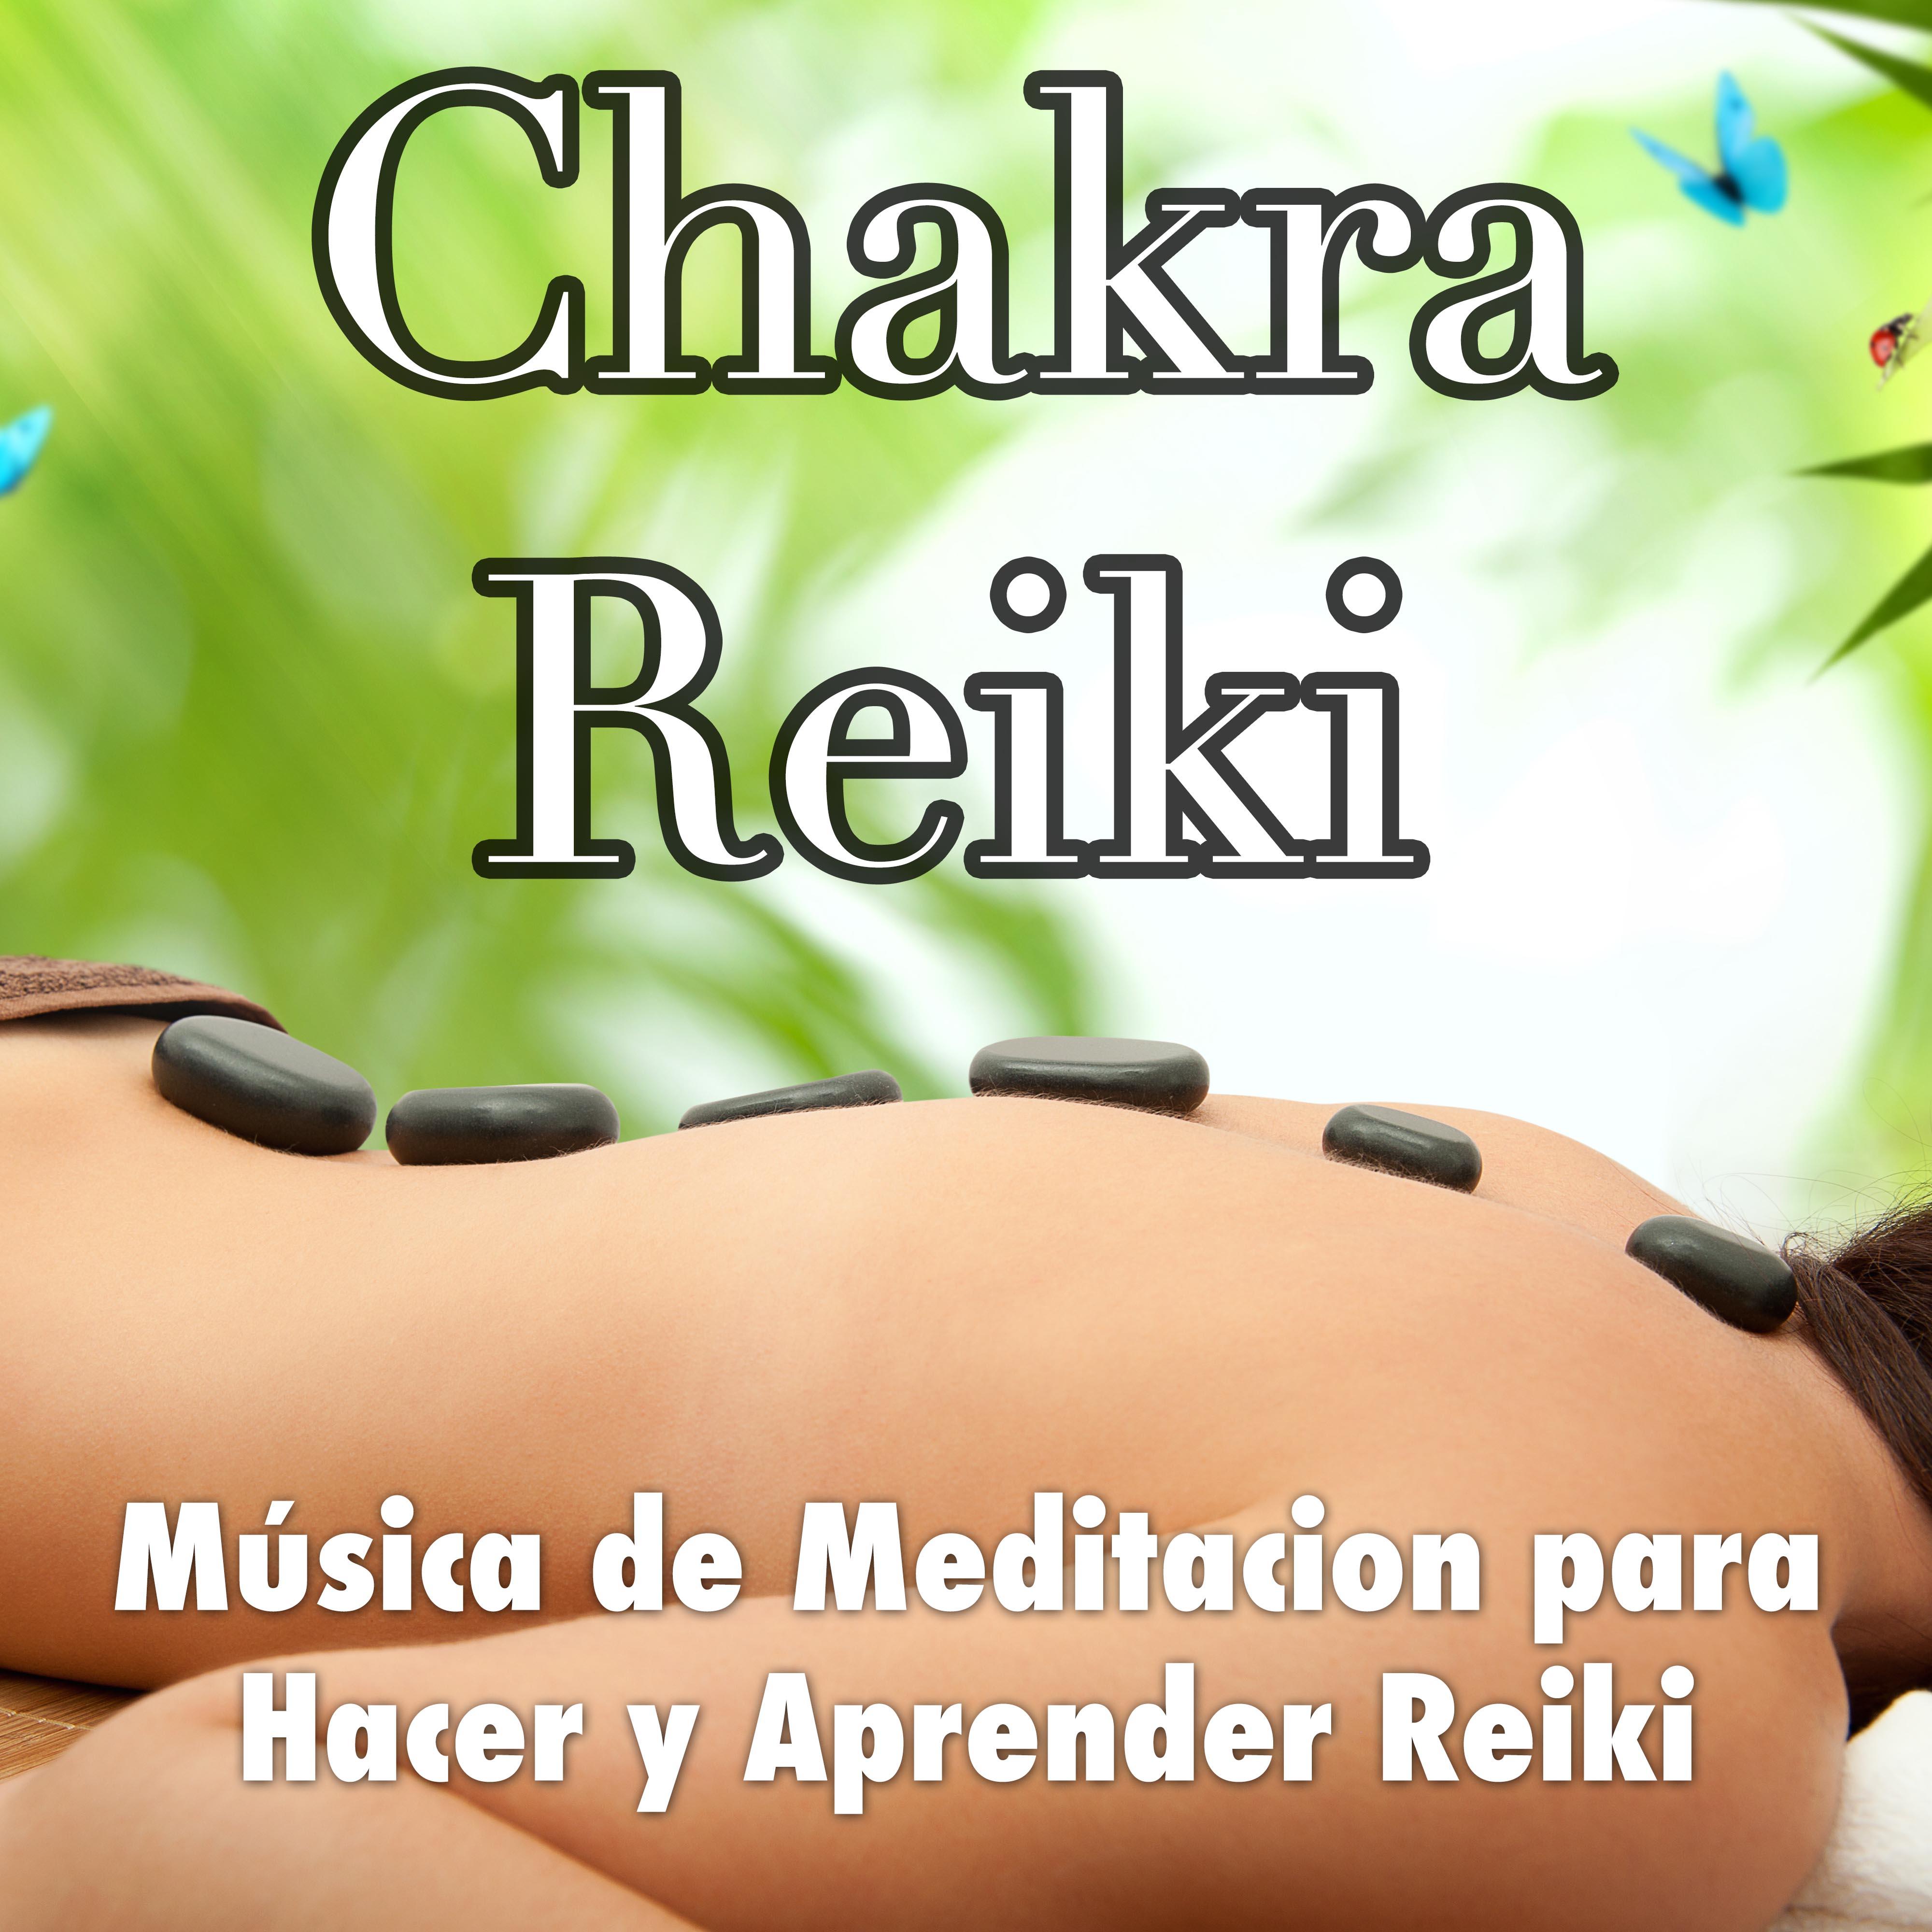 Chakra Reiki  Mu sica de Meditacion para Hacer y Aprender Reiki